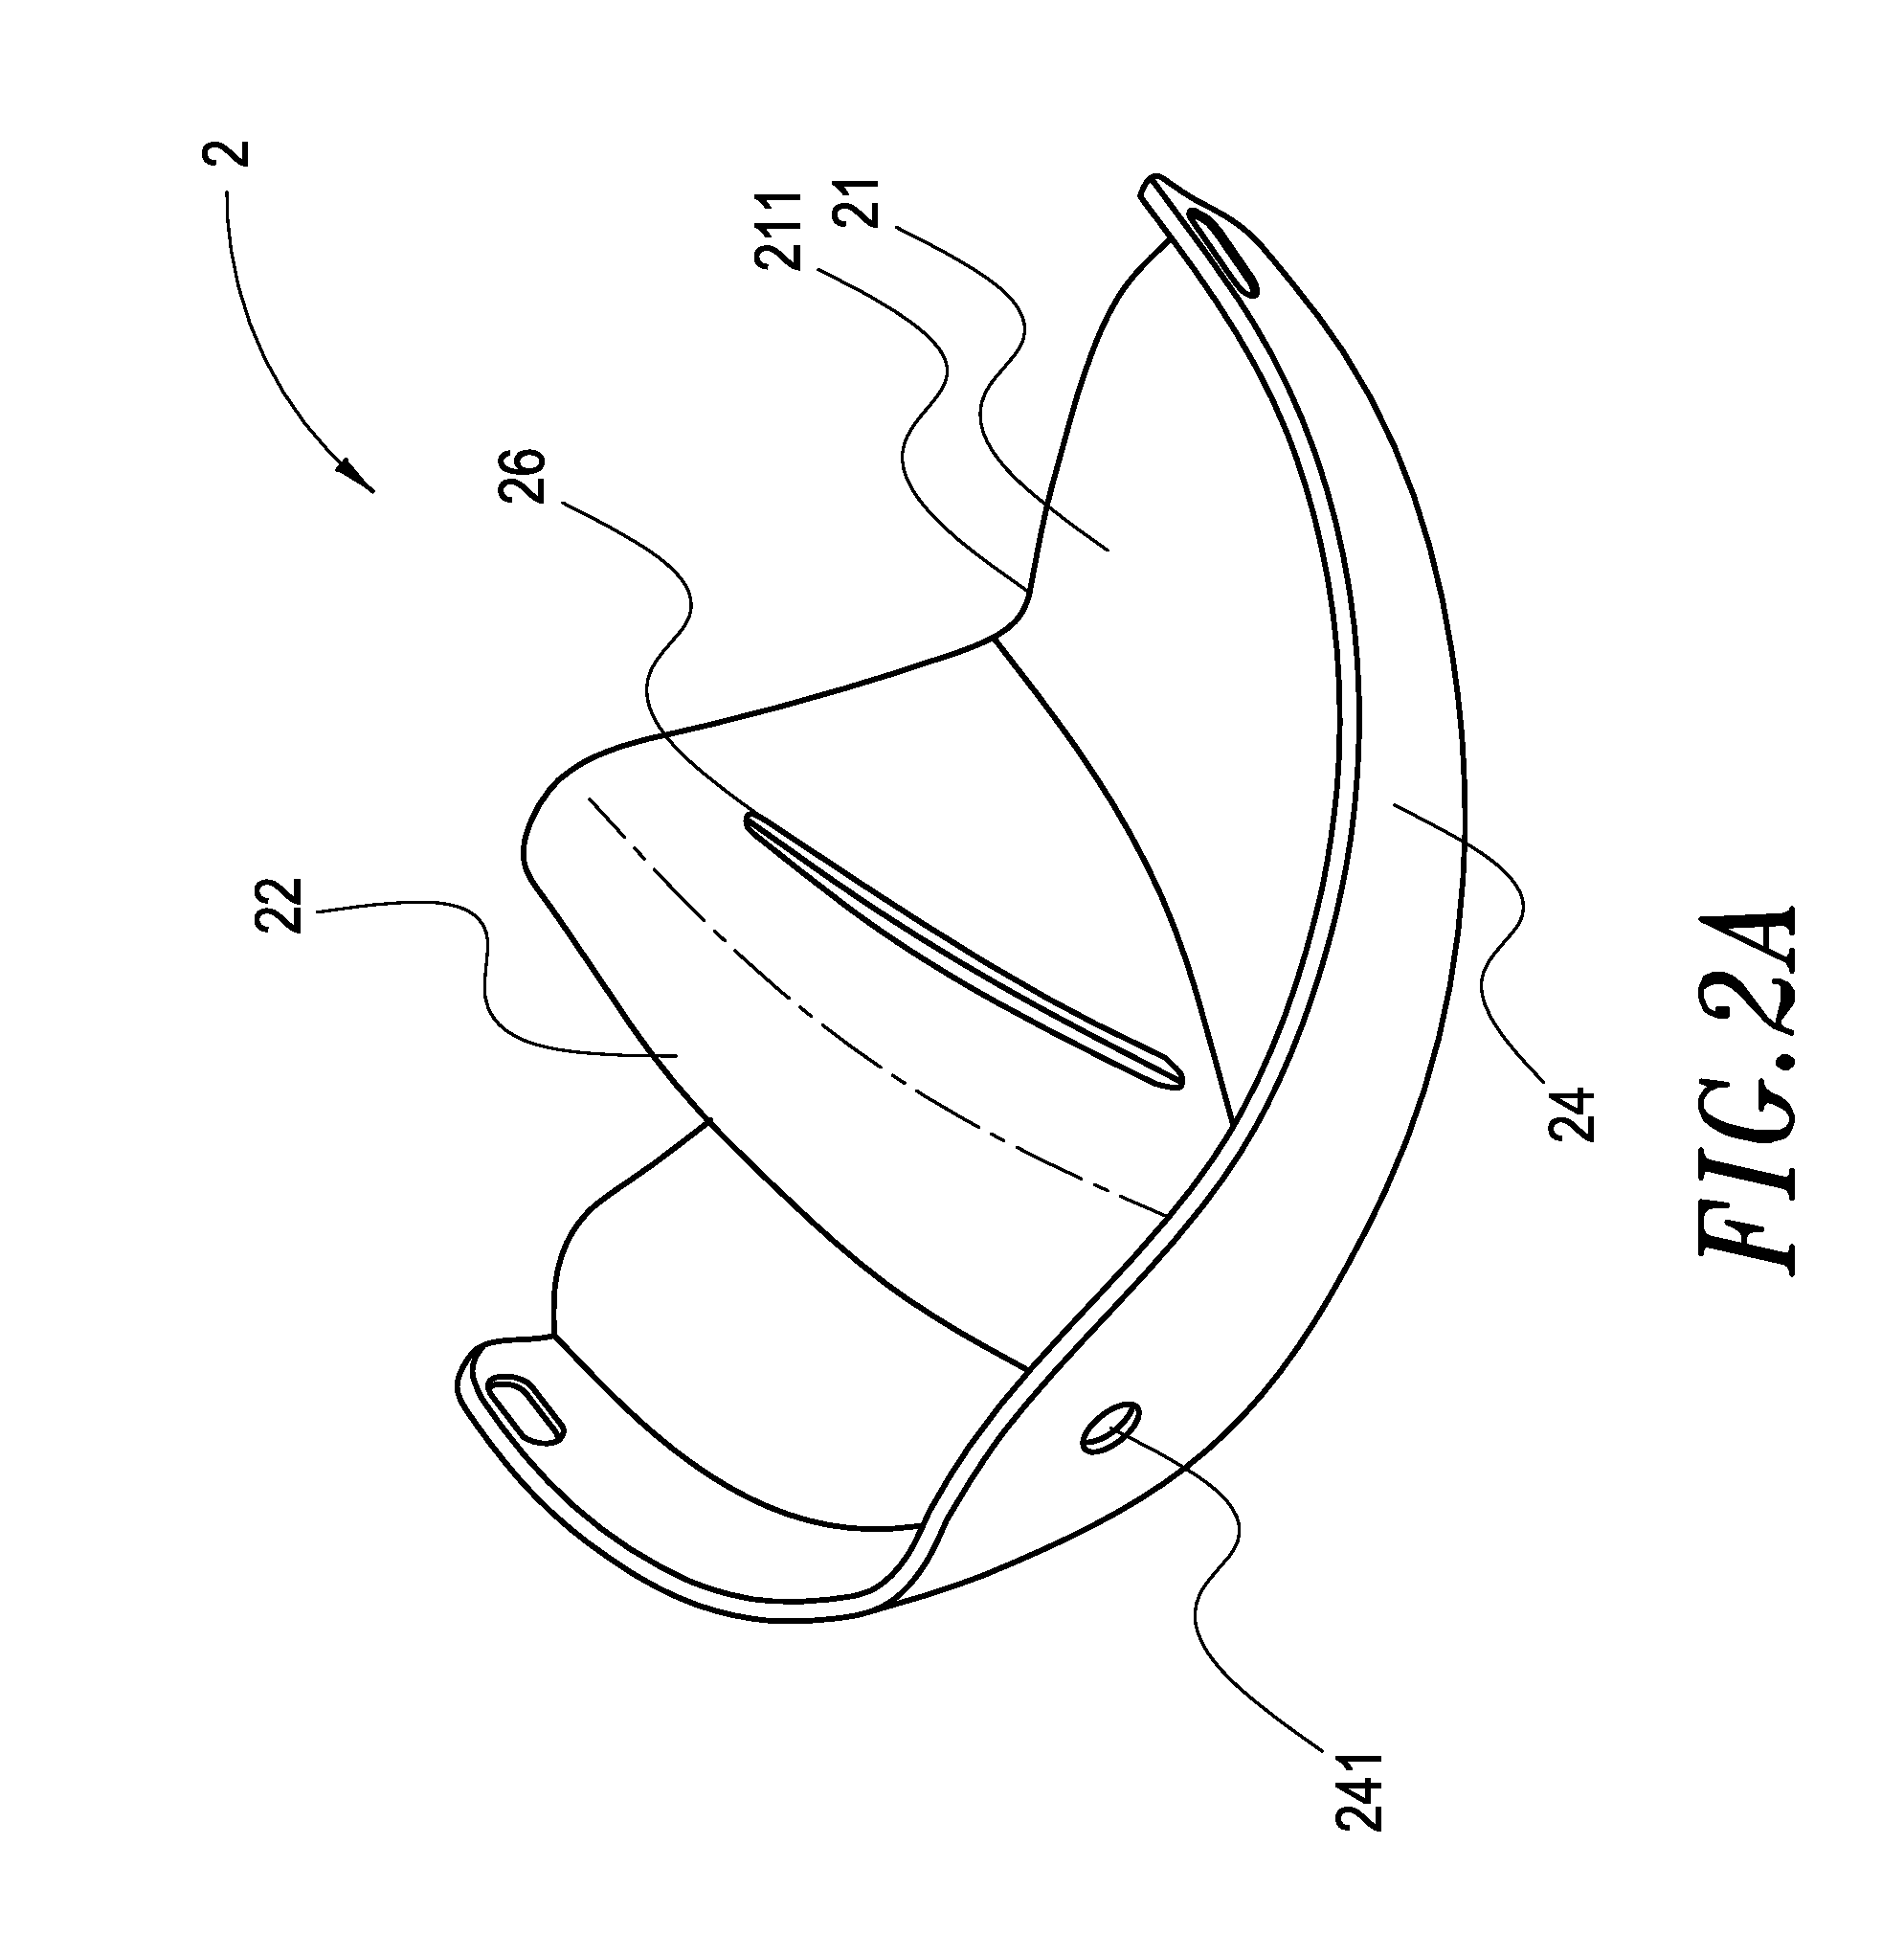 Nose-shielding device for helmet